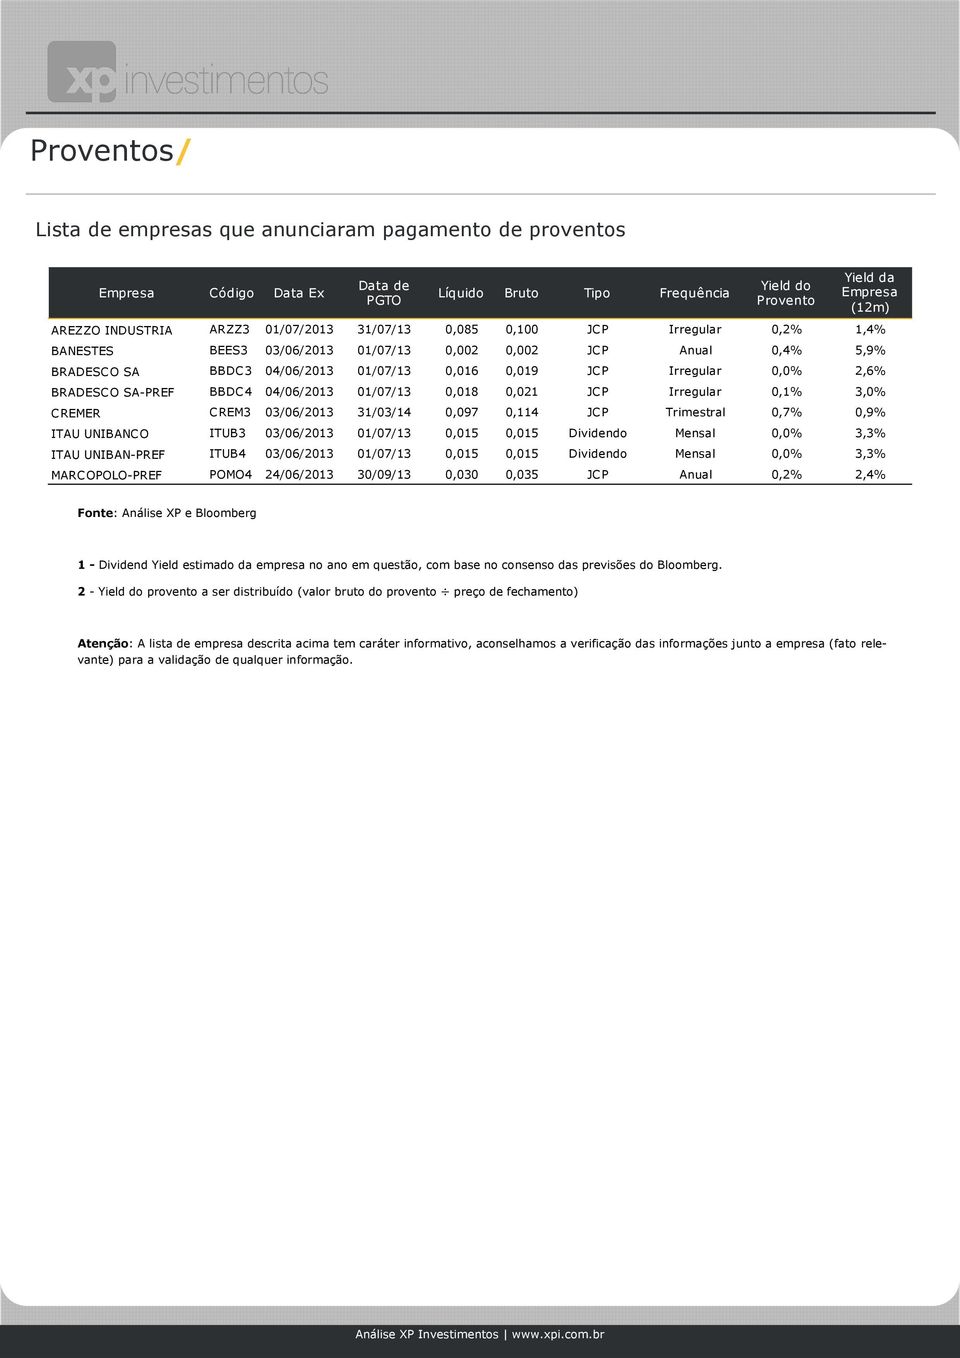 BRADESCO SA-PREF BBDC4 04/06/2013 01/07/13 0,018 0,021 JCP Irregular 0,1% 3,0% CREMER CREM3 03/06/2013 31/03/14 0,097 0,114 JCP Trimestral 0,7% 0,9% ITAU UNIBANCO ITUB3 03/06/2013 01/07/13 0,015